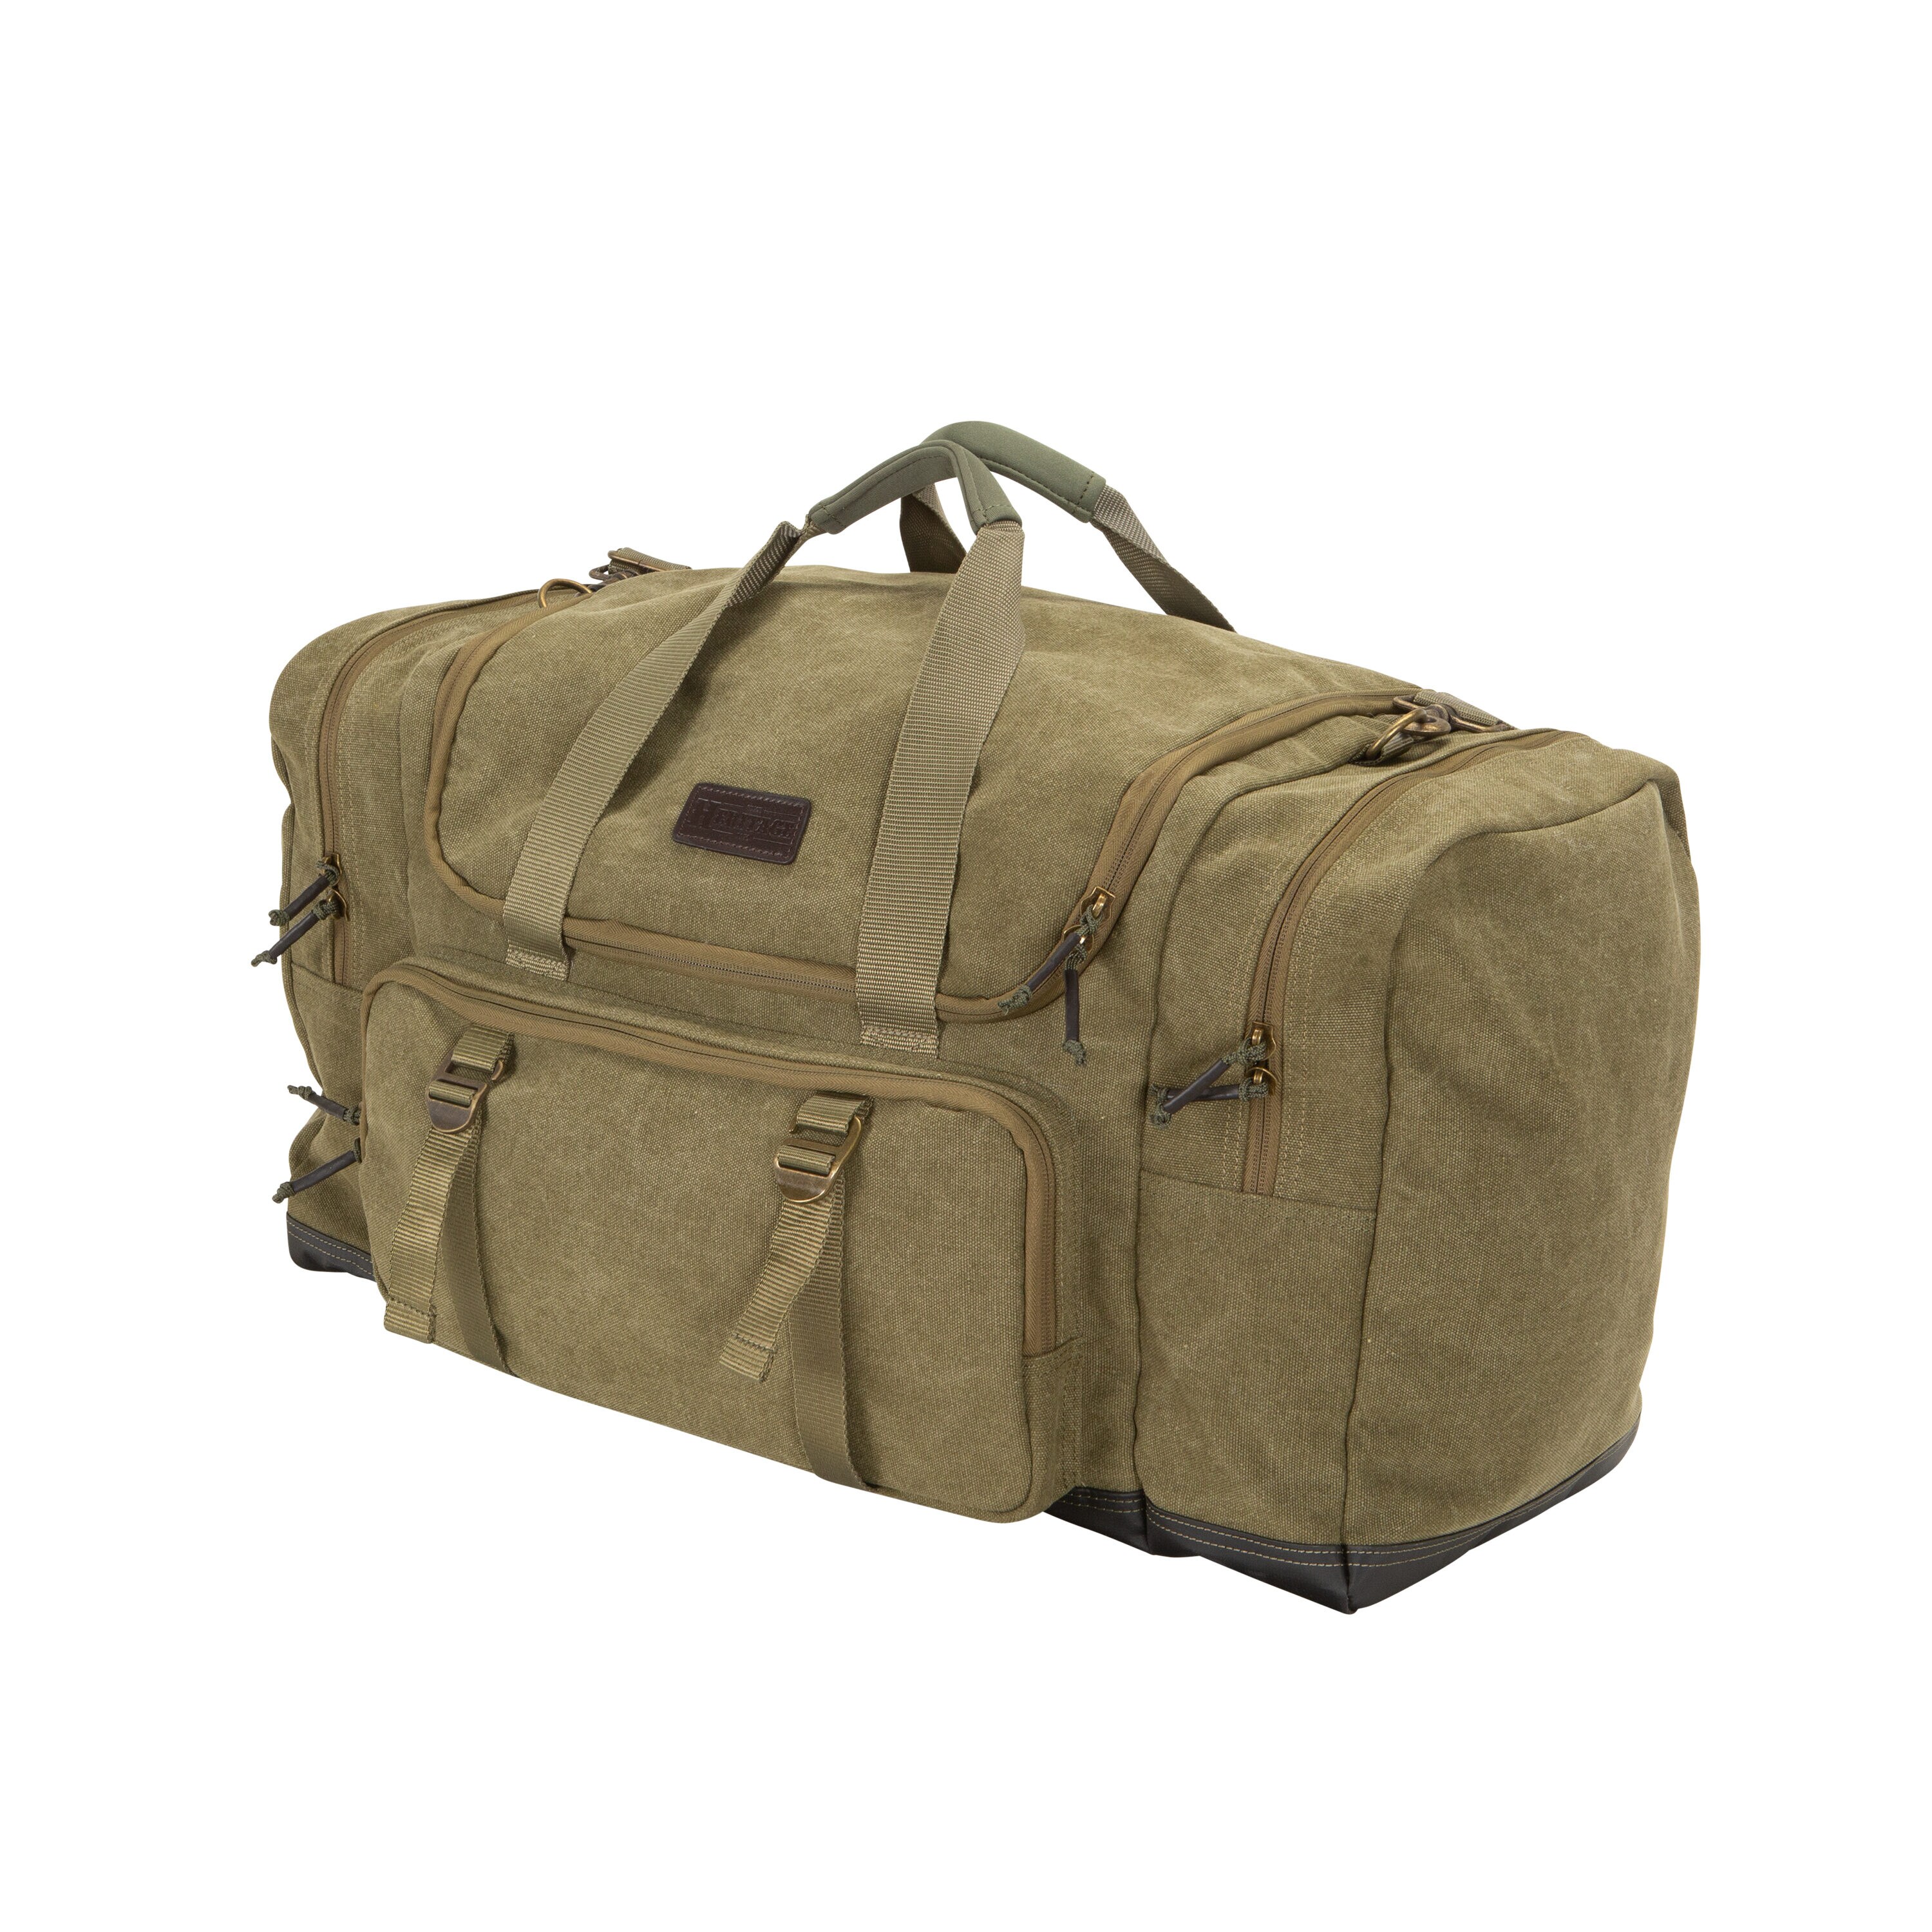 Stansport 42 Cotton Canvas Duffel Bag With Shoulder Strap : Target